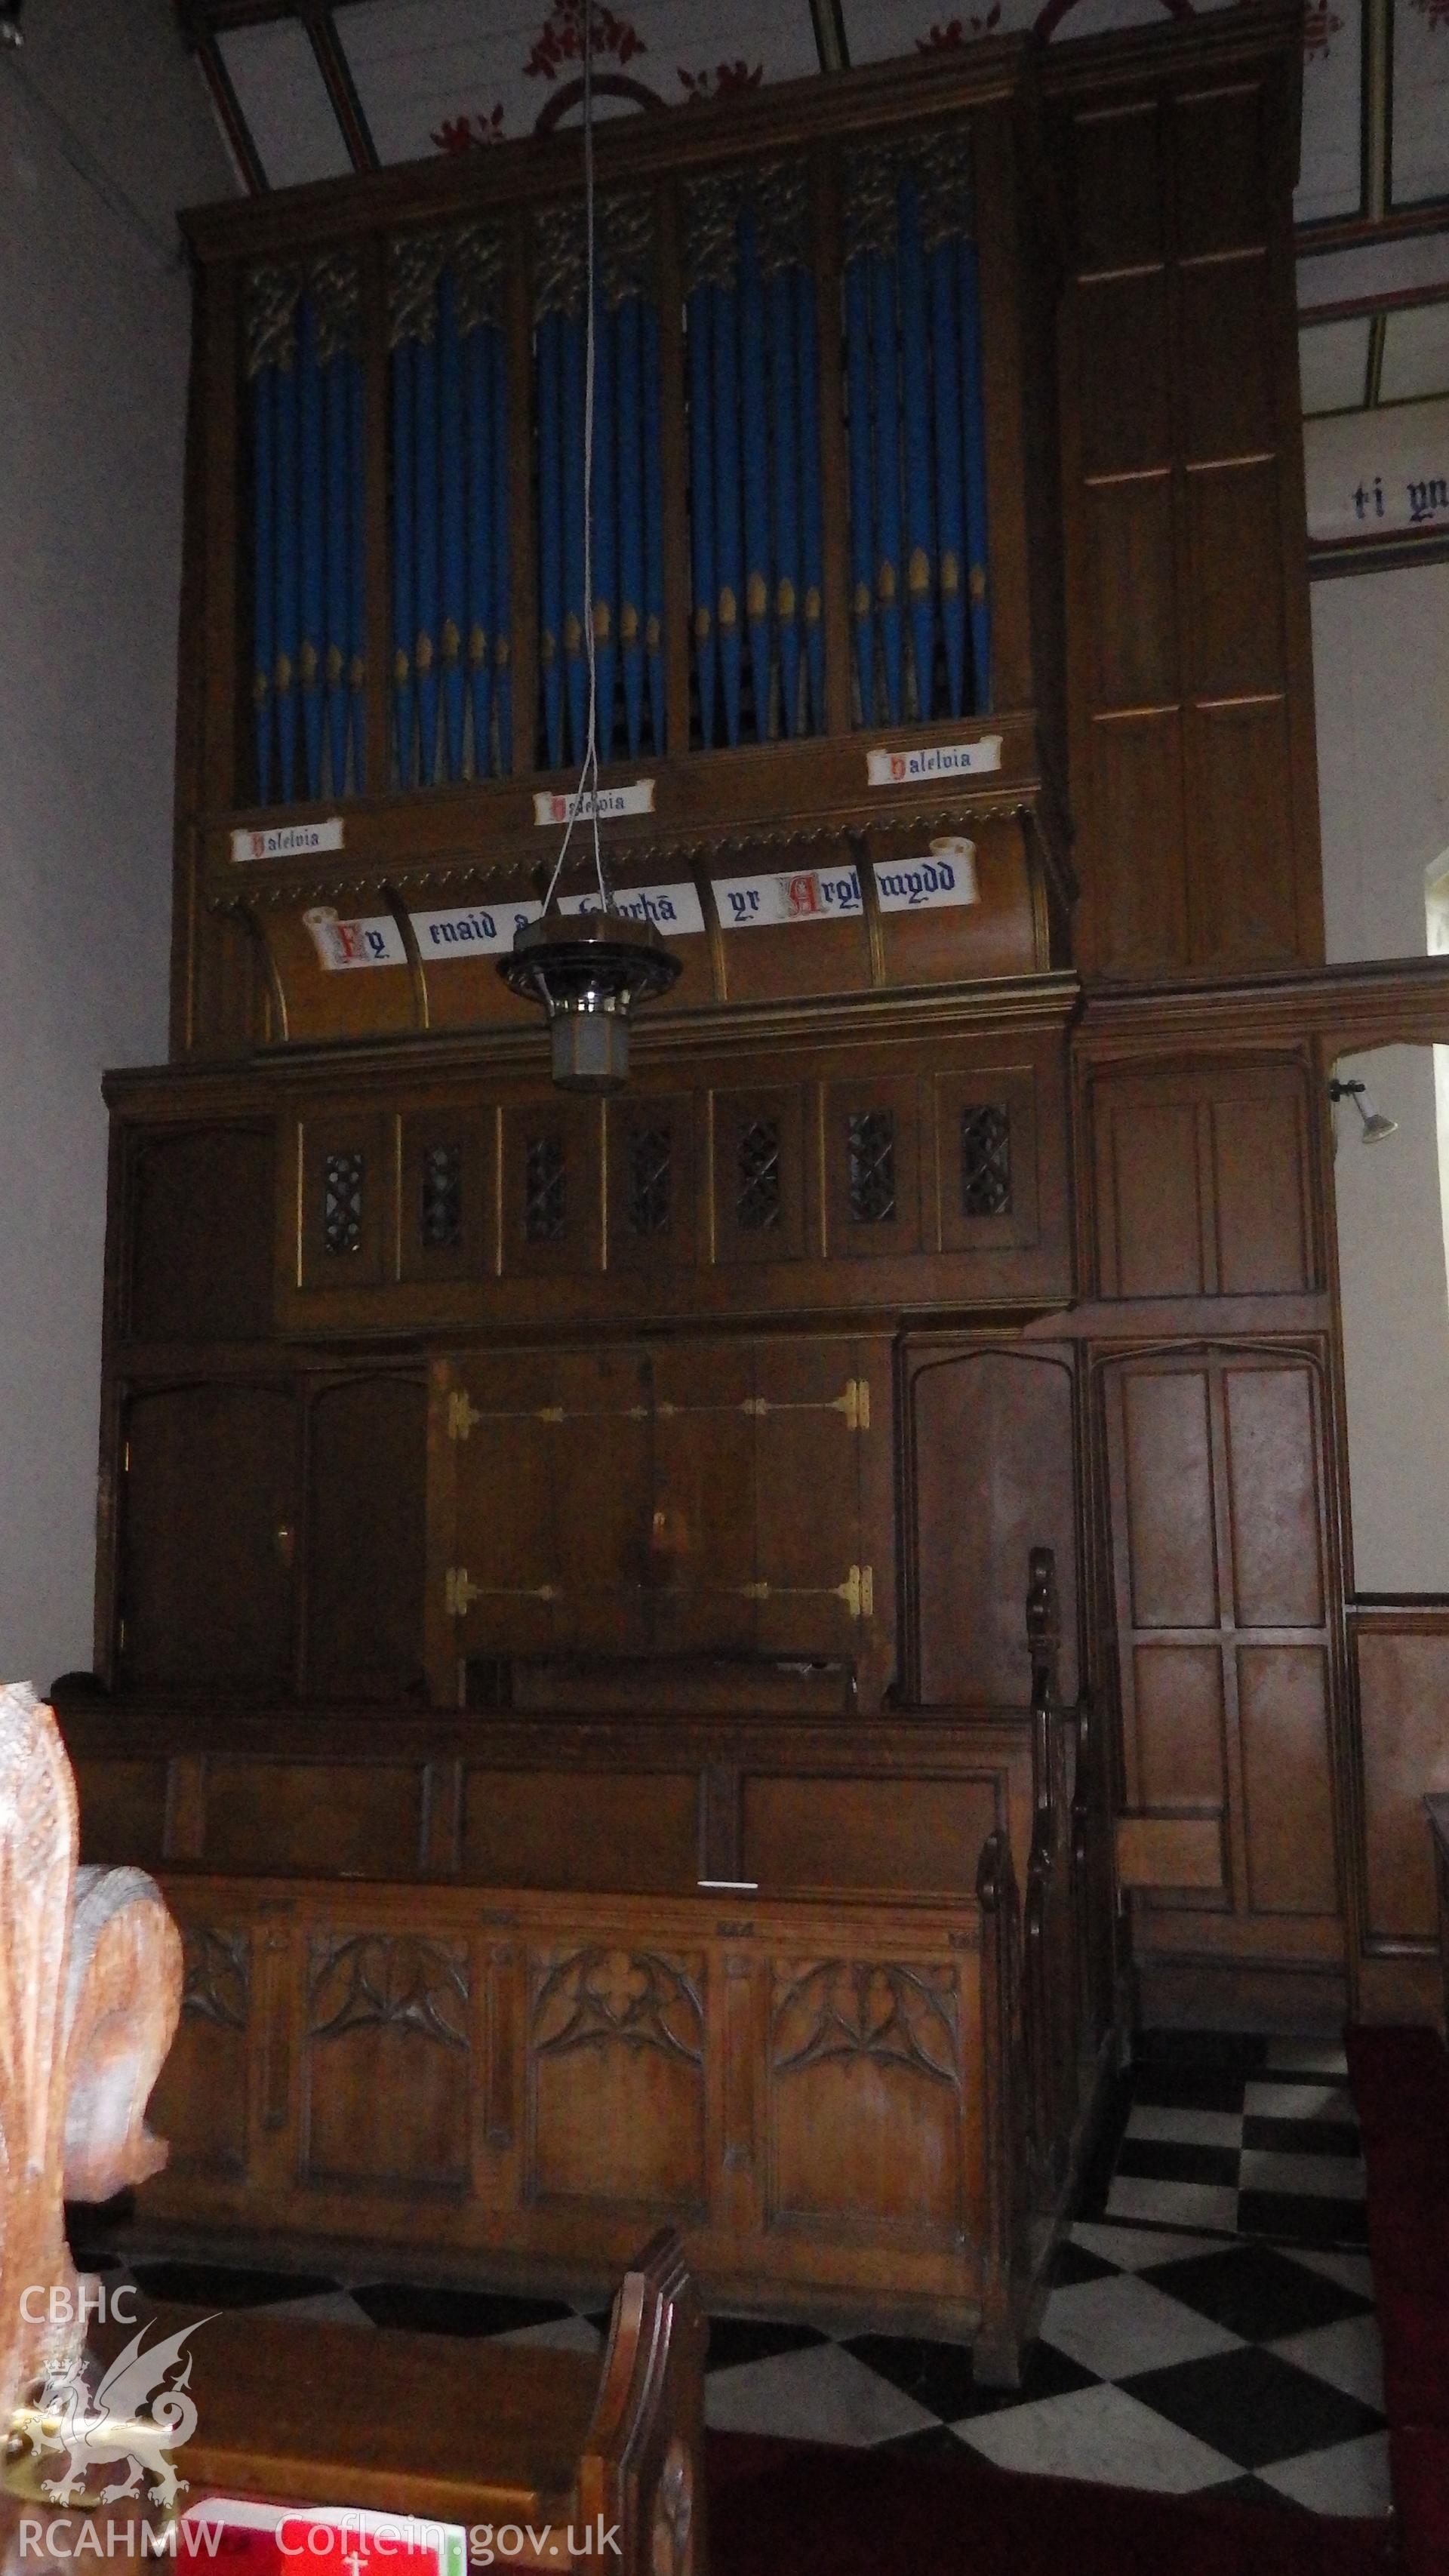 Organ and choir stalls in northeast corner of chancel